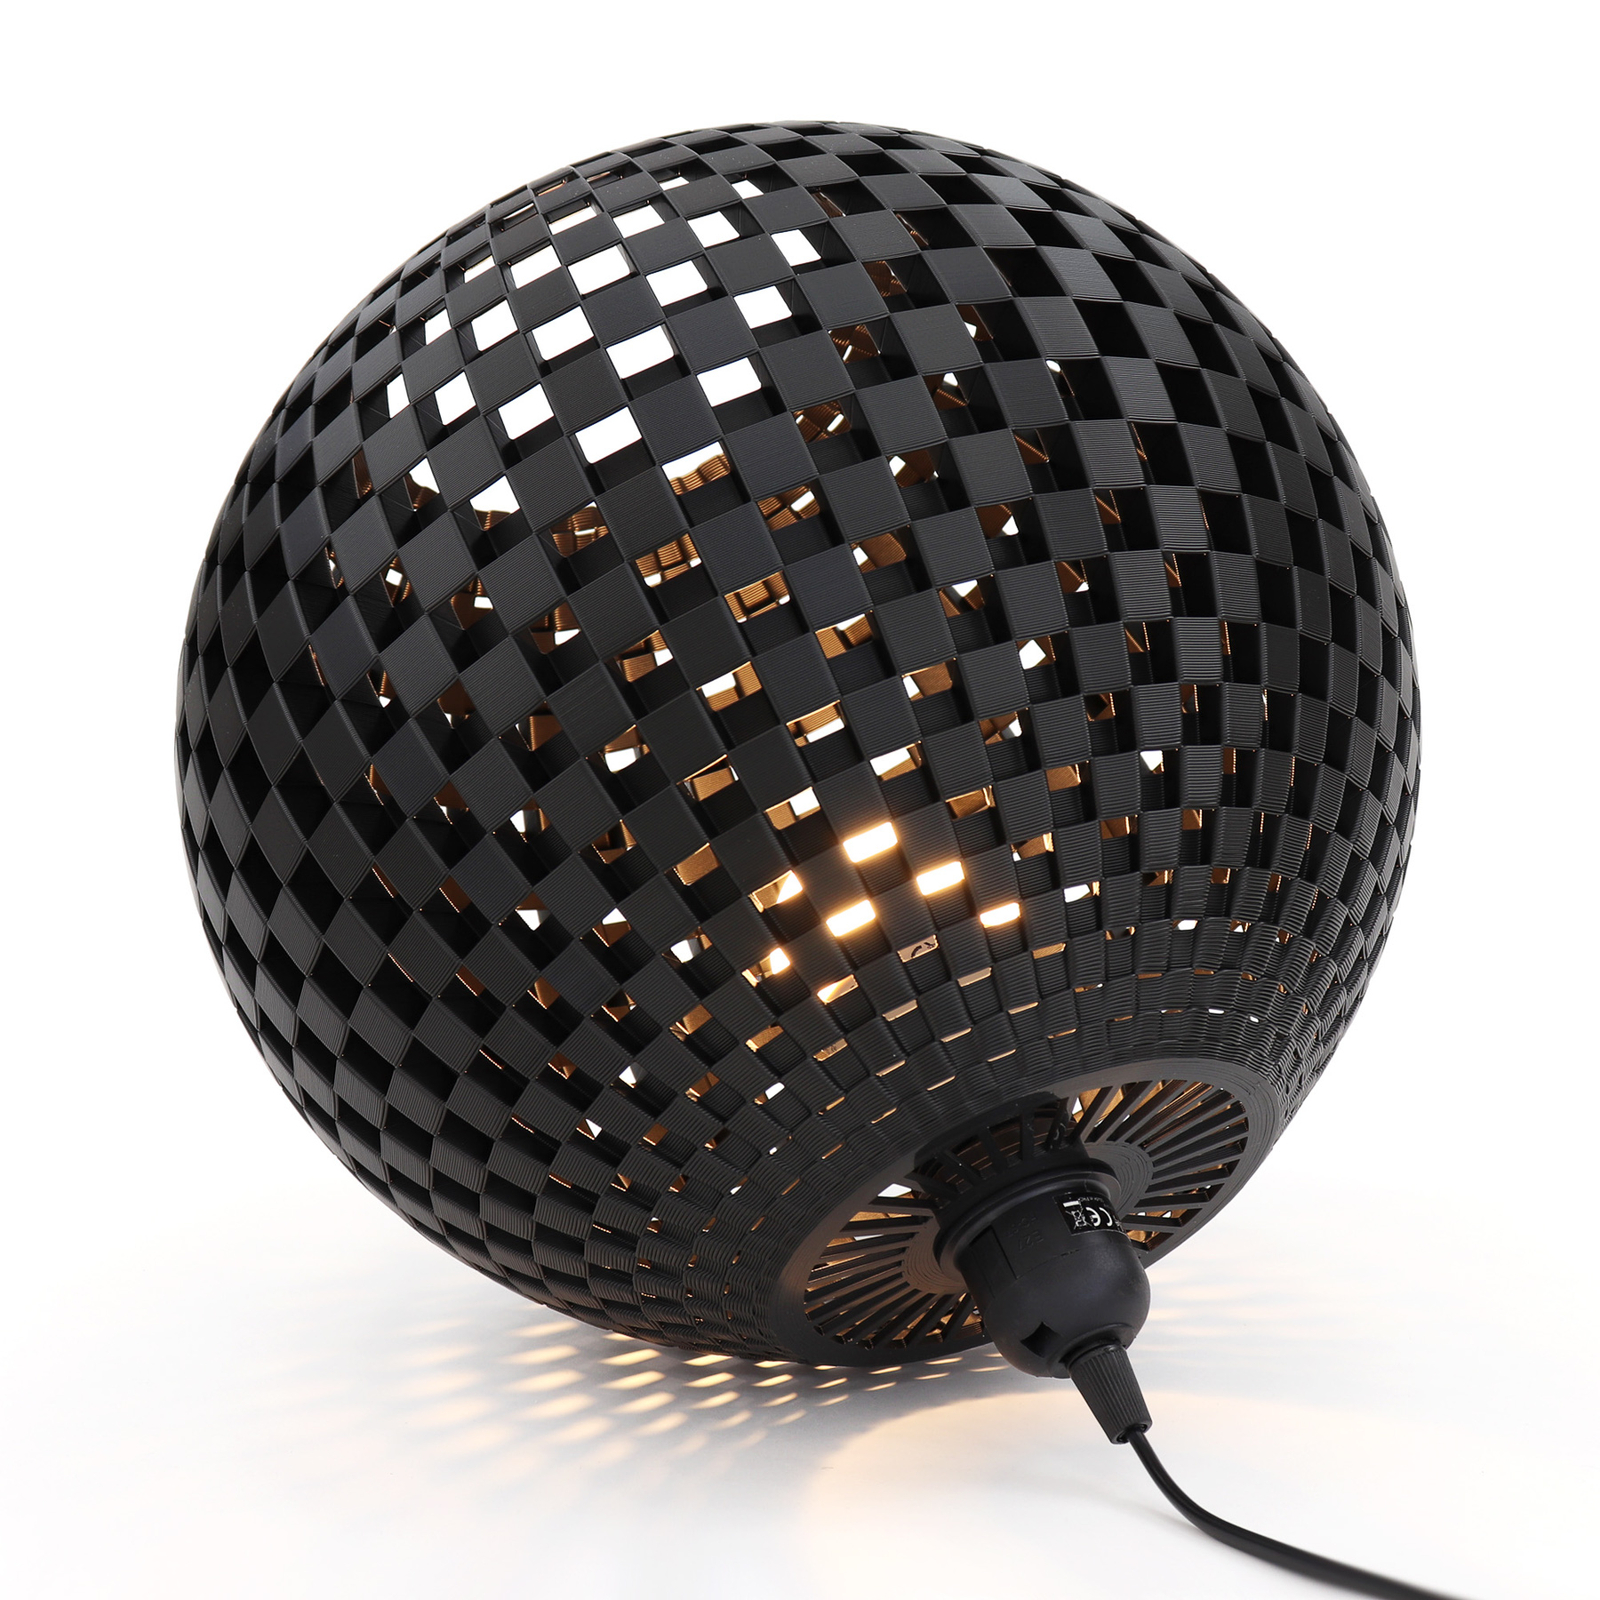 Flechtwerk table lamp, lying sphere, graphite